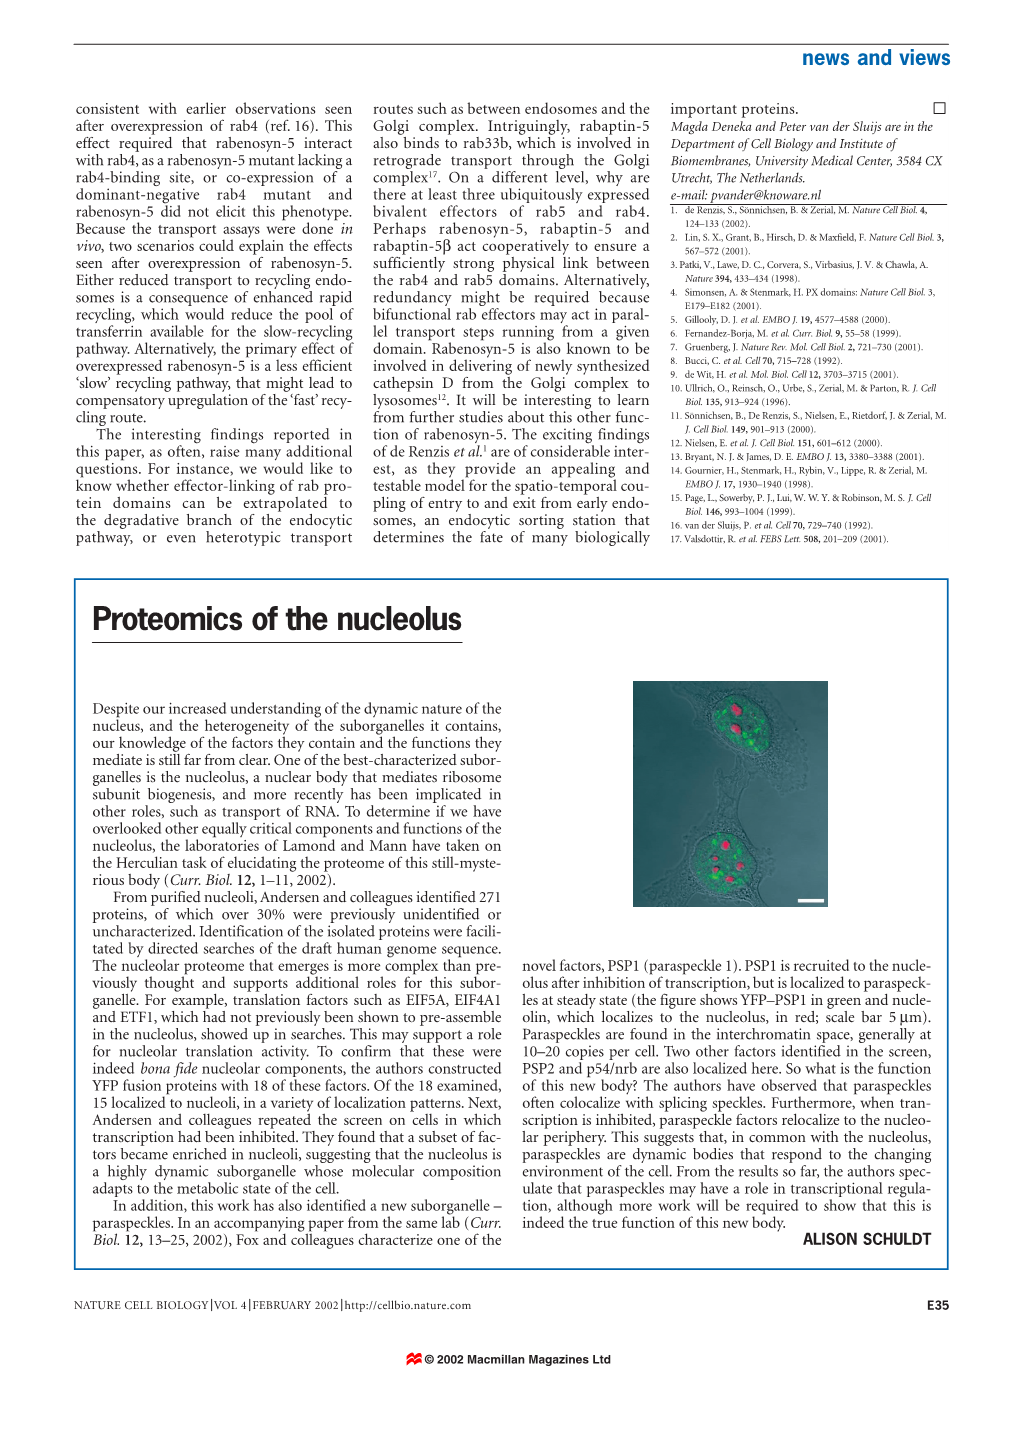 Proteomics of the Nucleolus